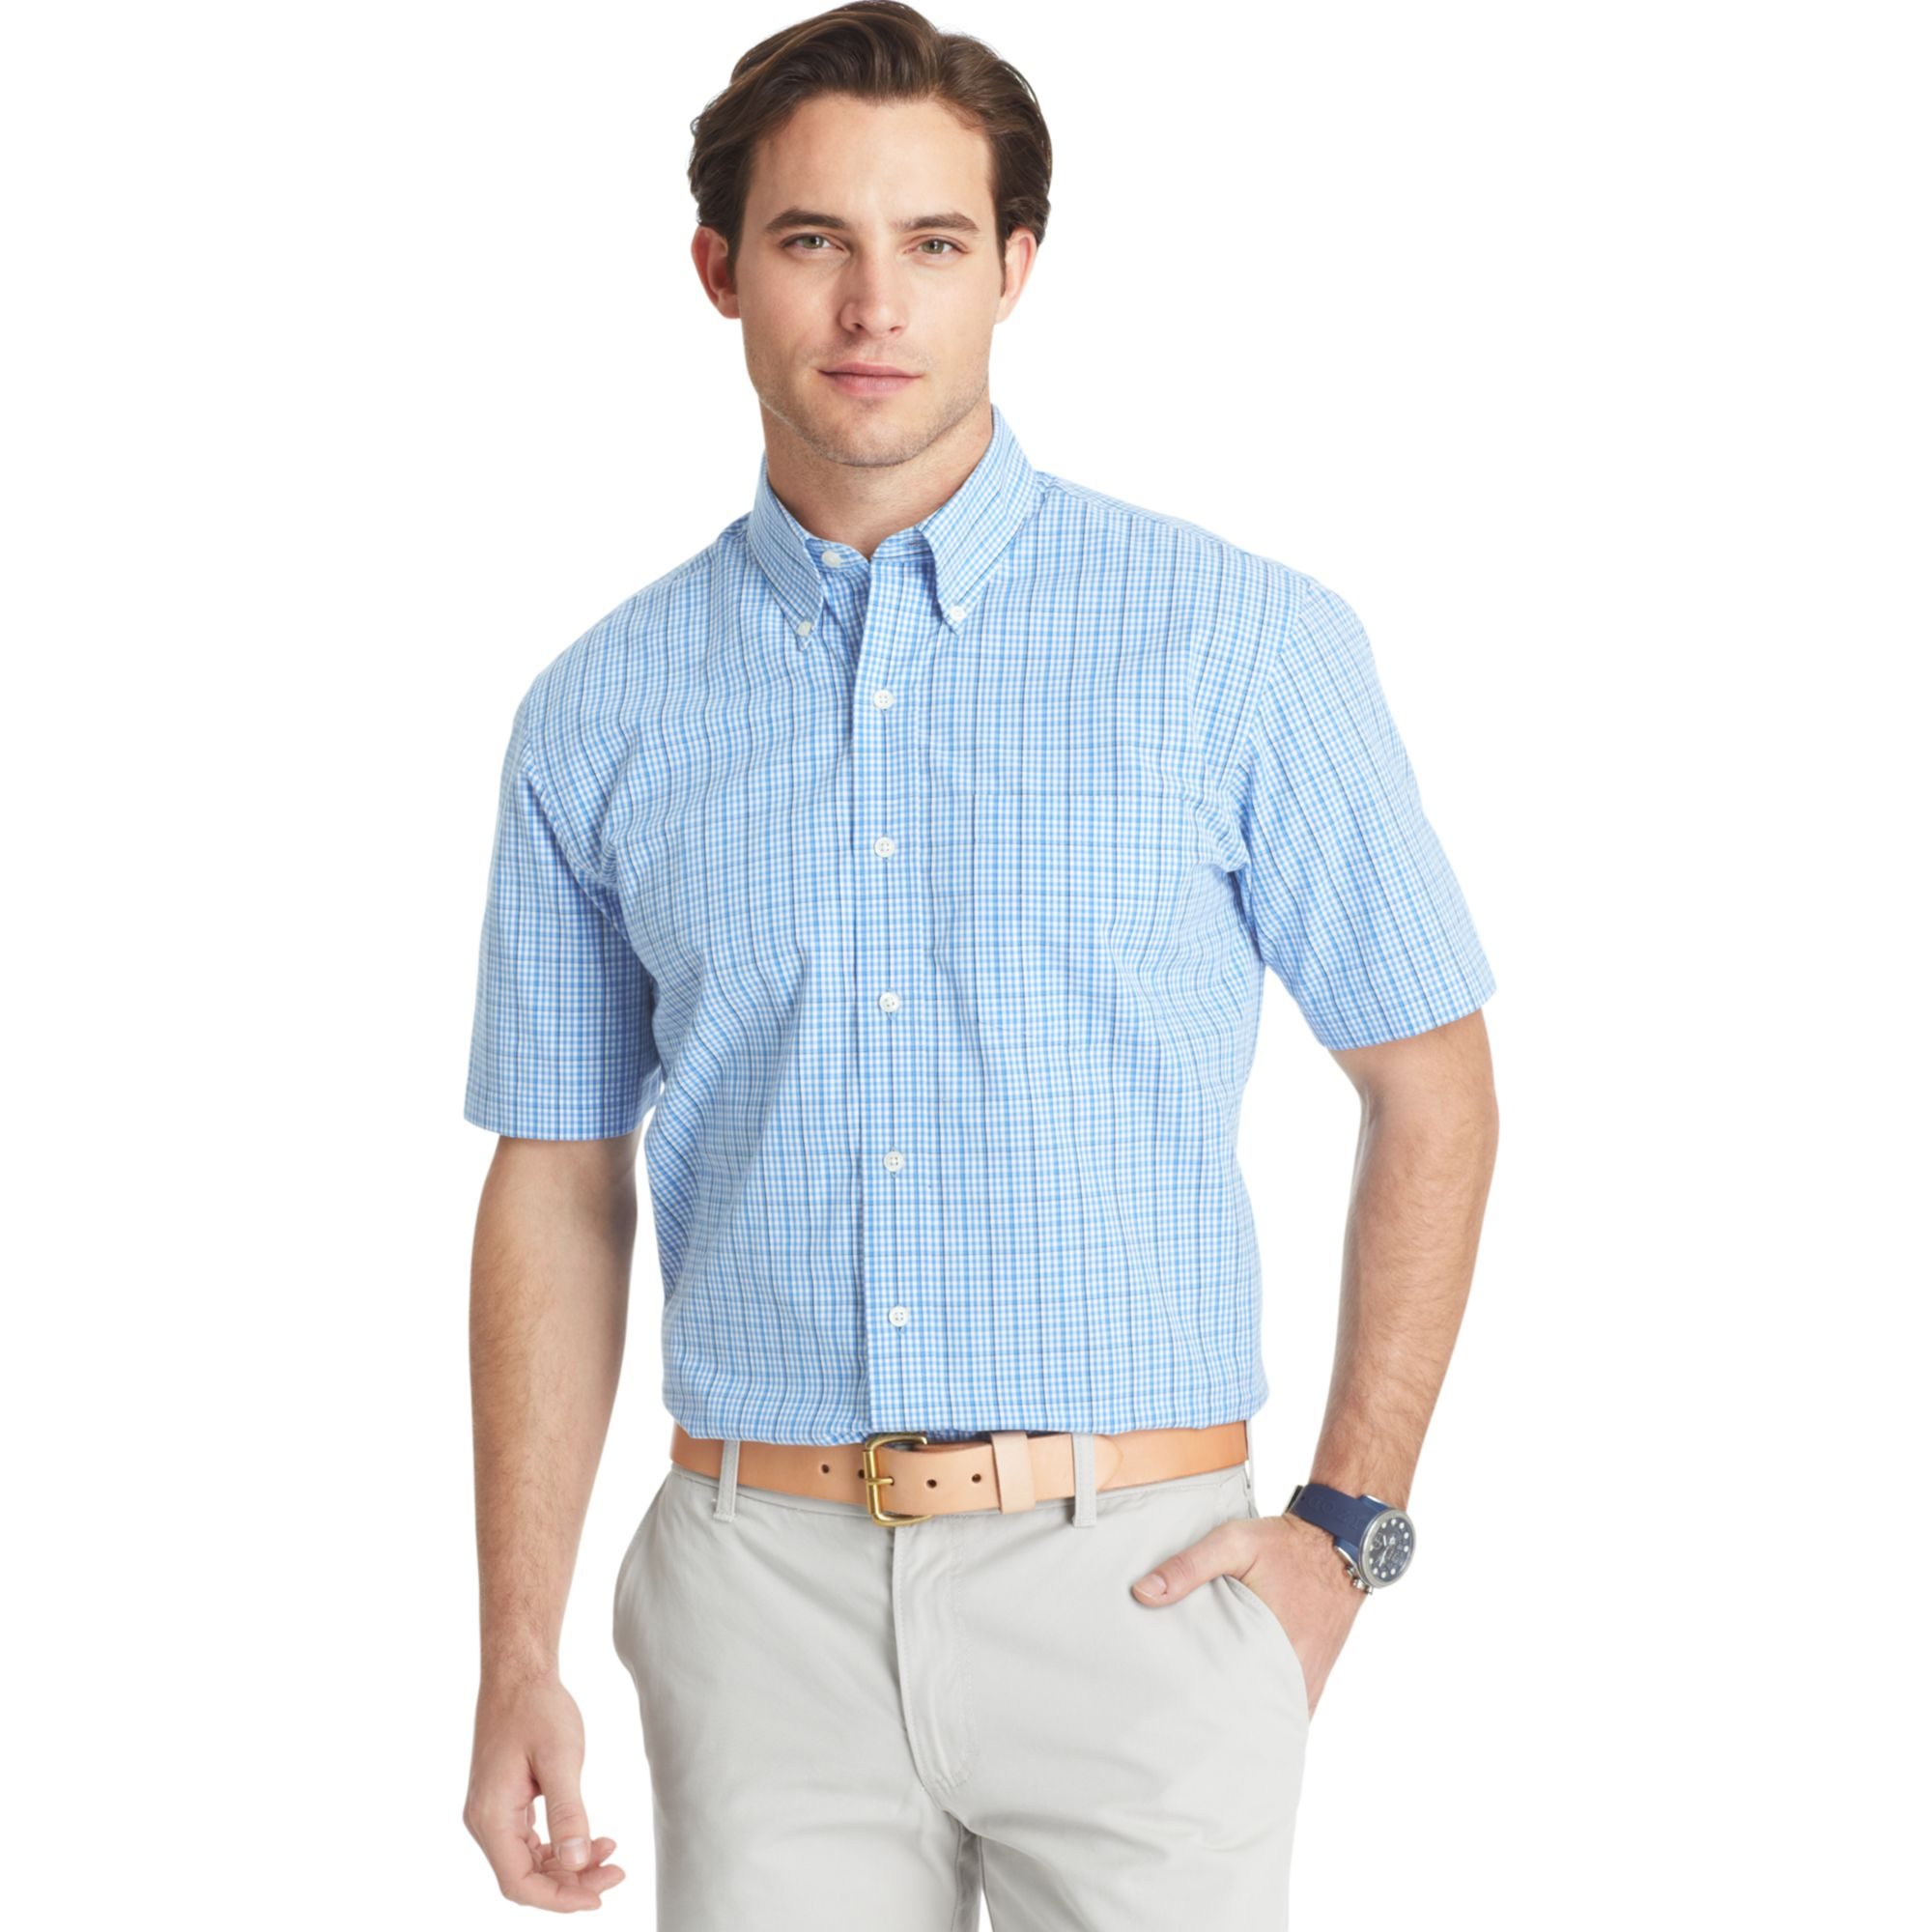 Lyst - Izod Saltwater Poplin Plaid Shirt in Blue for Men